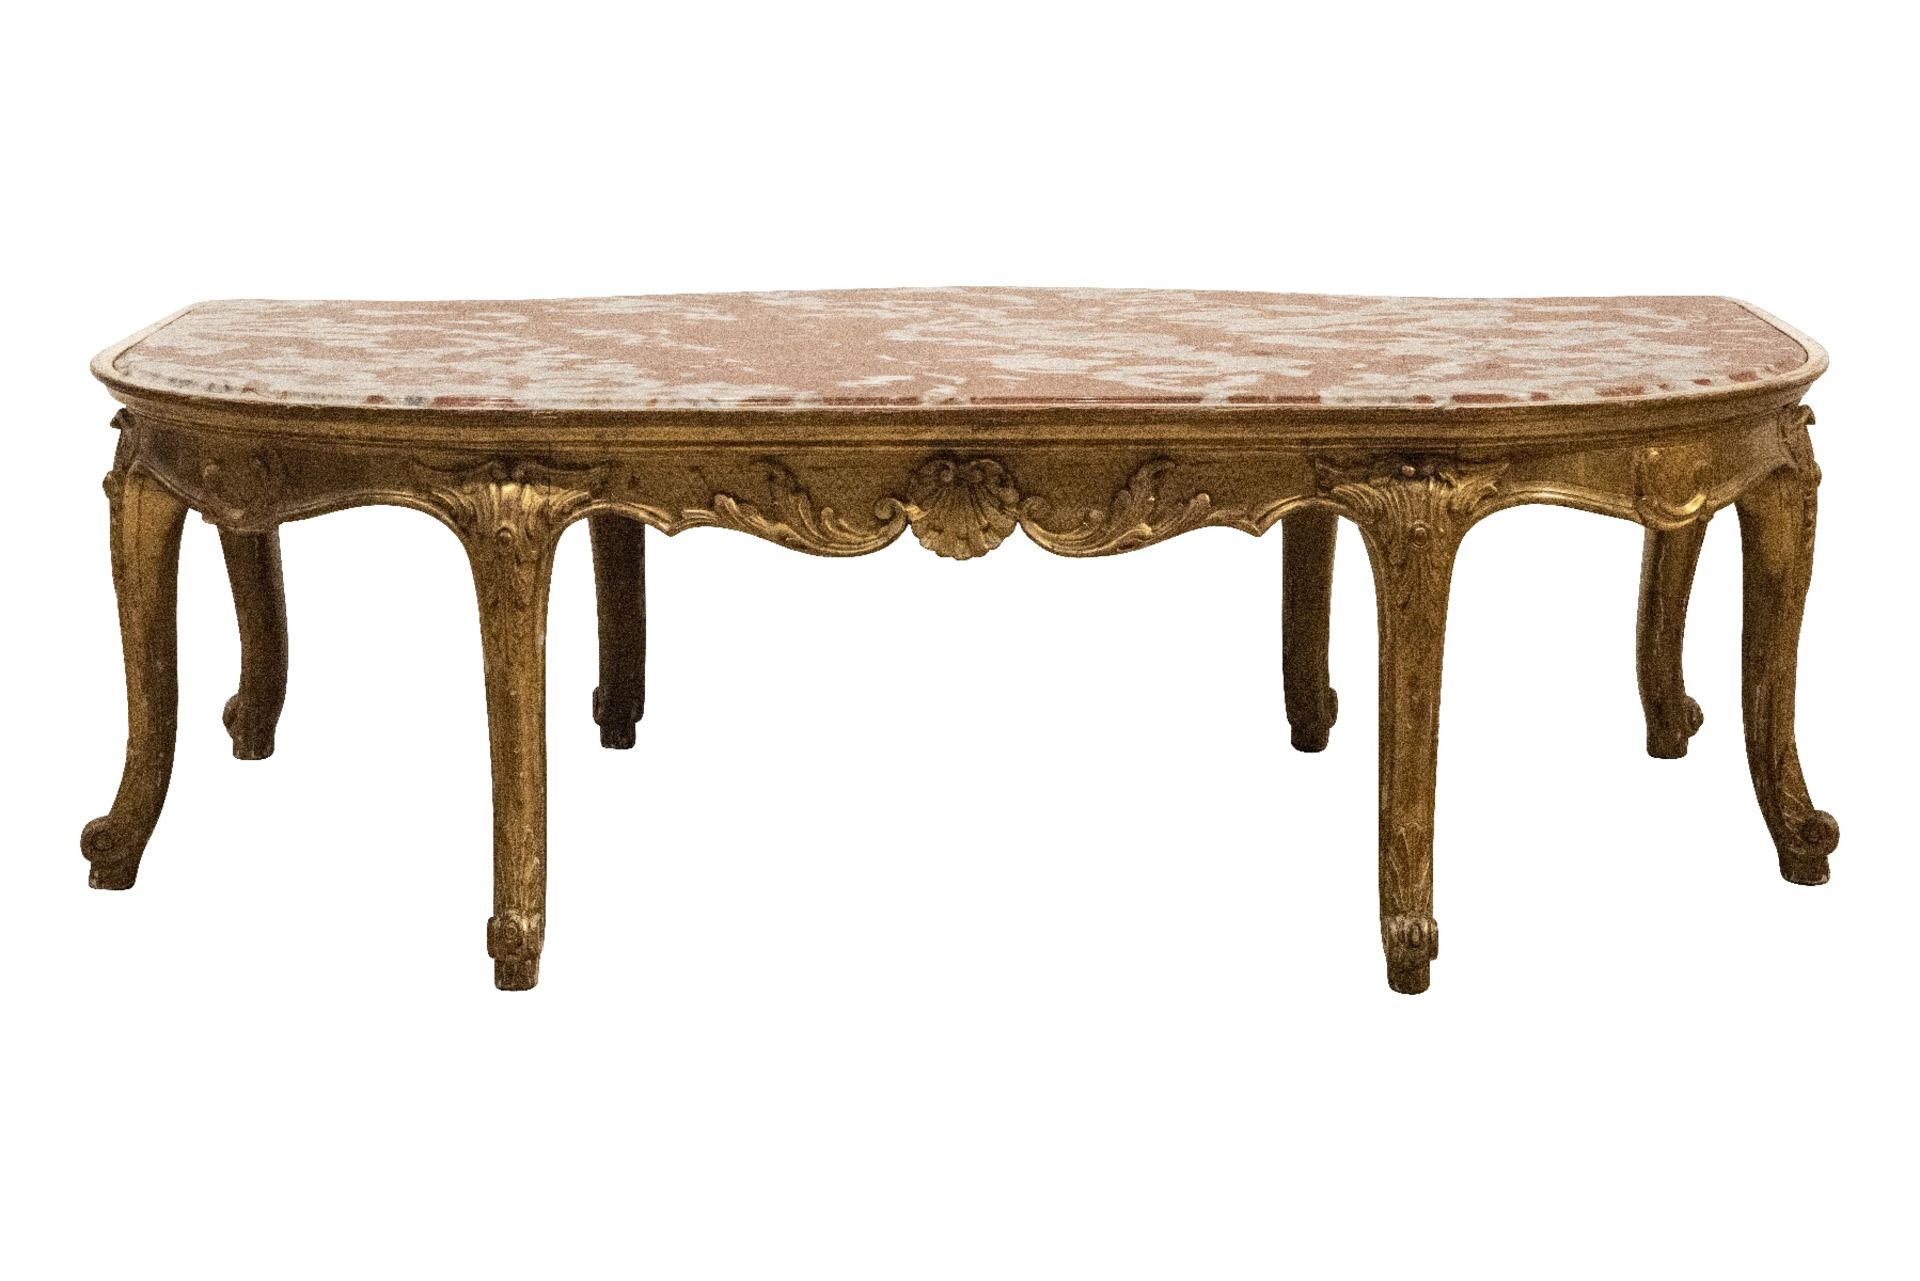 Ovaler Couchtisch mit Marmorplatte | Oval coffee table with marble top - Bild 5 aus 5